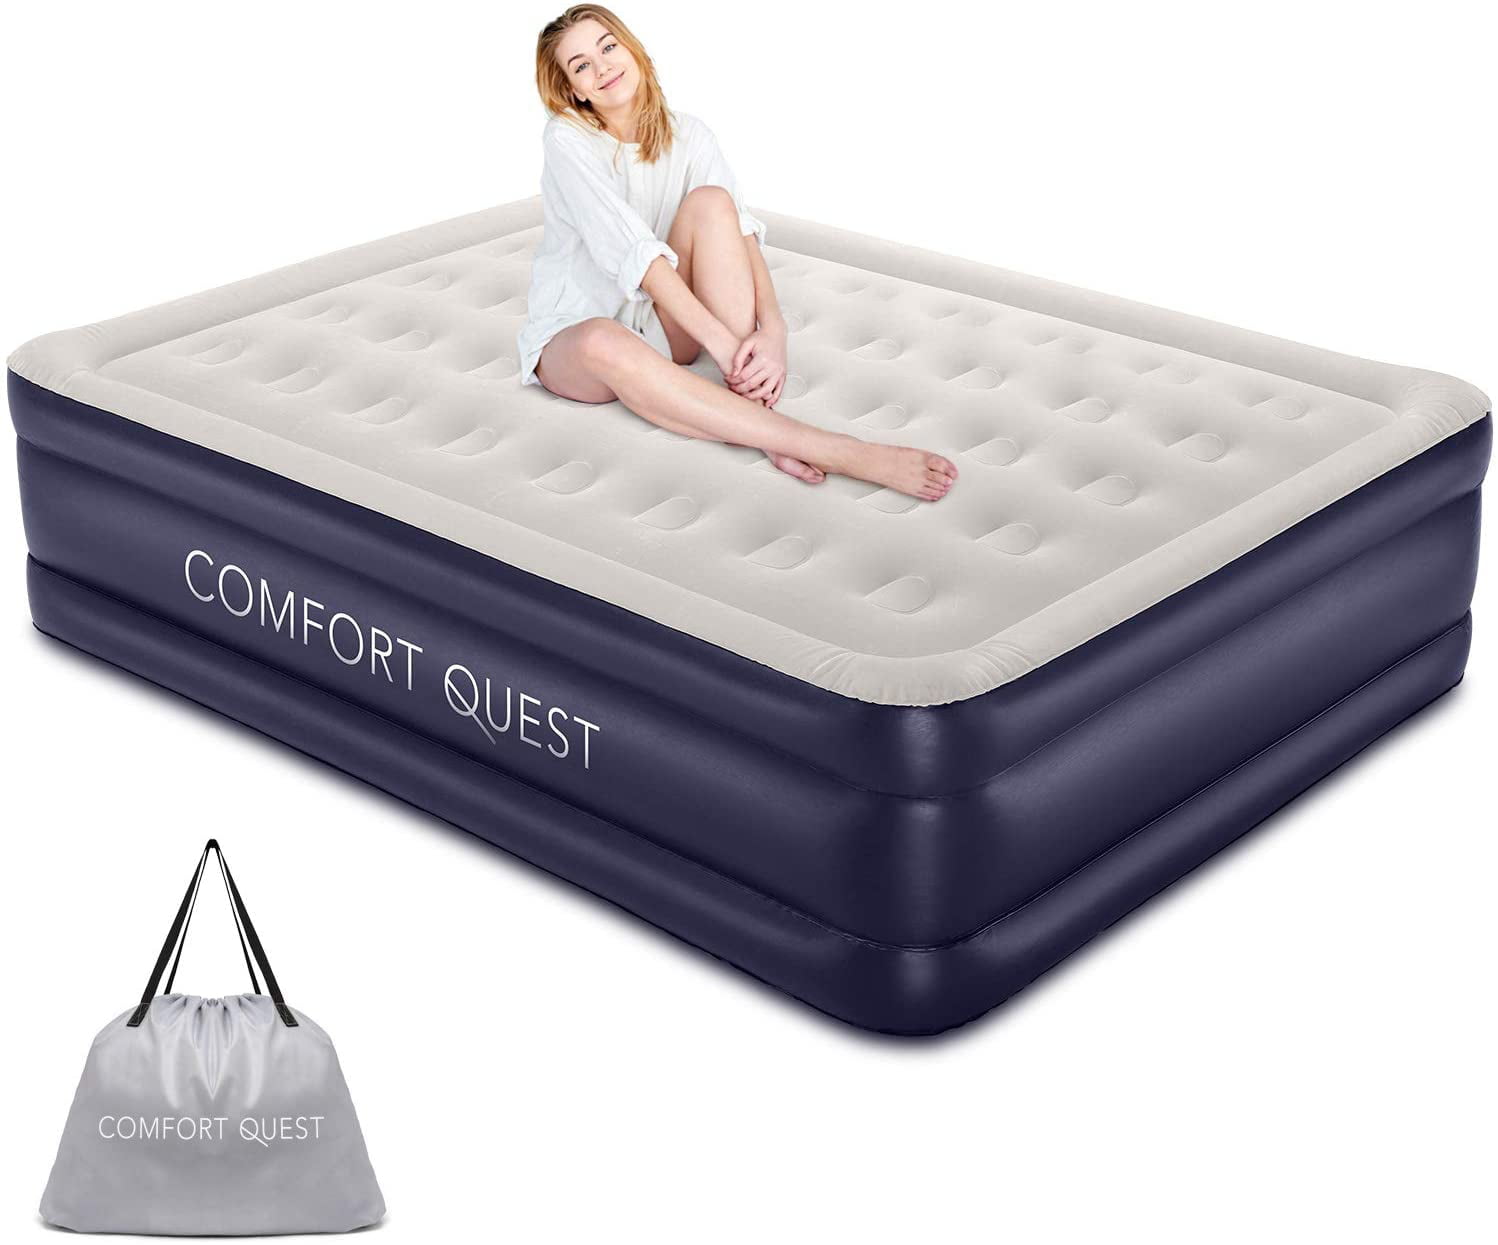 quest queen size raised air mattress